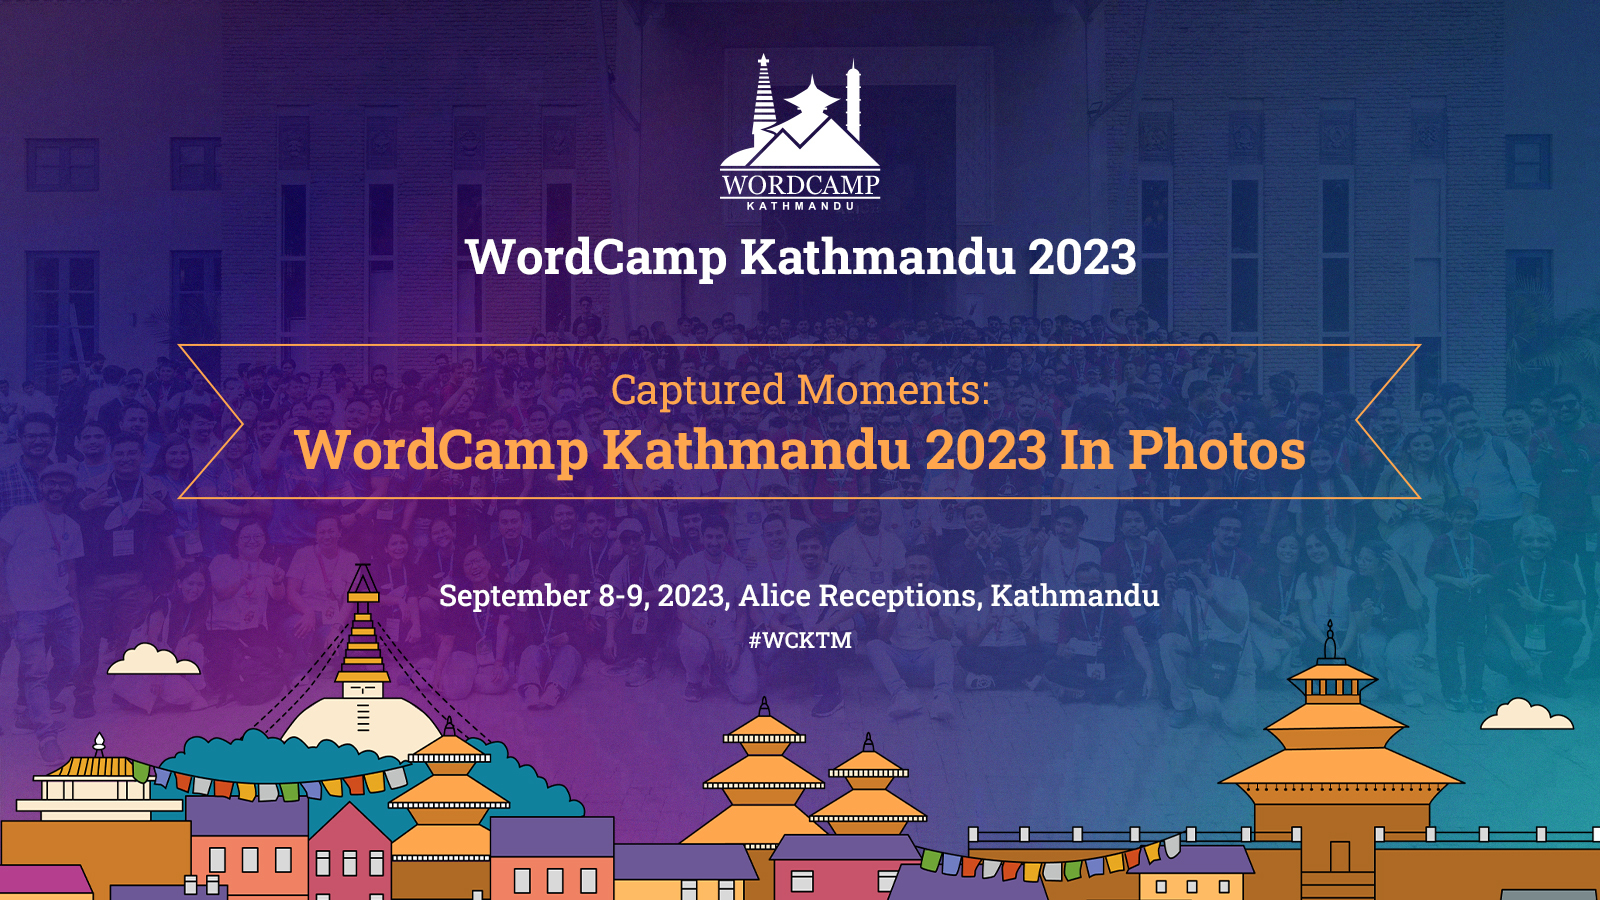 Captured Moments: WordCamp Kathmandu 2023 in Photos